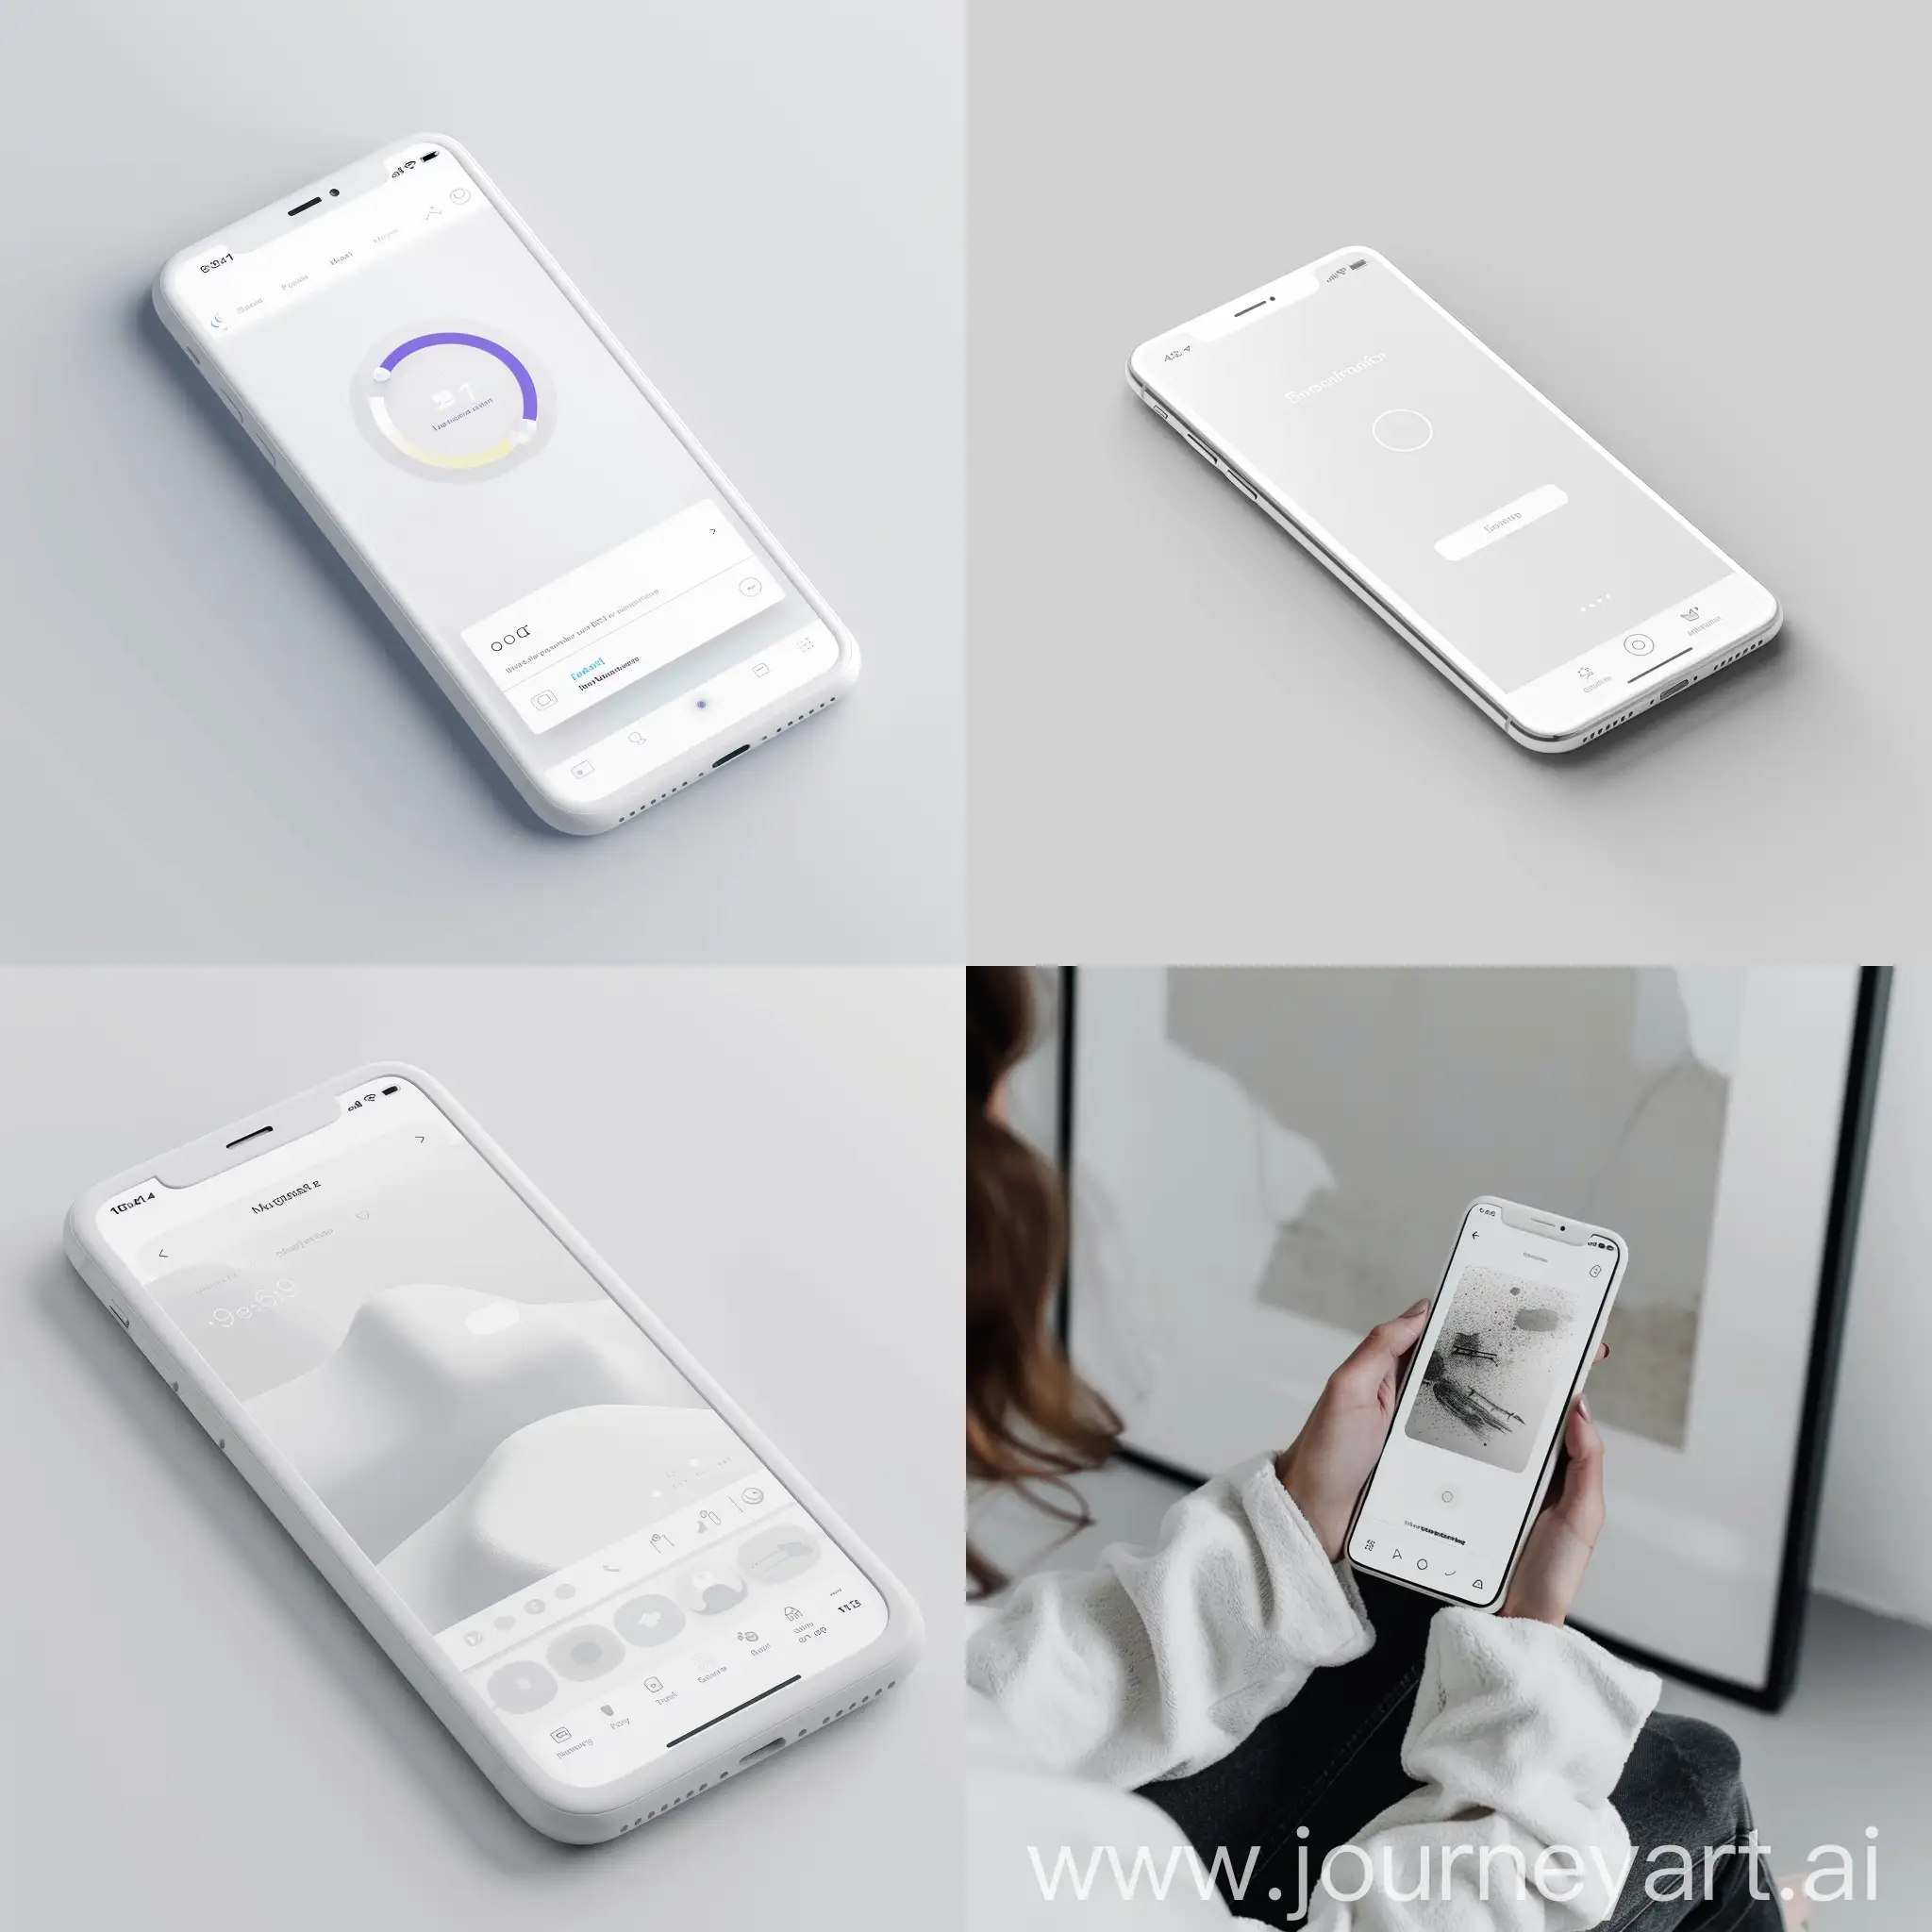 Minimalistic-Mobile-App-Communication-Design-in-White-Shades